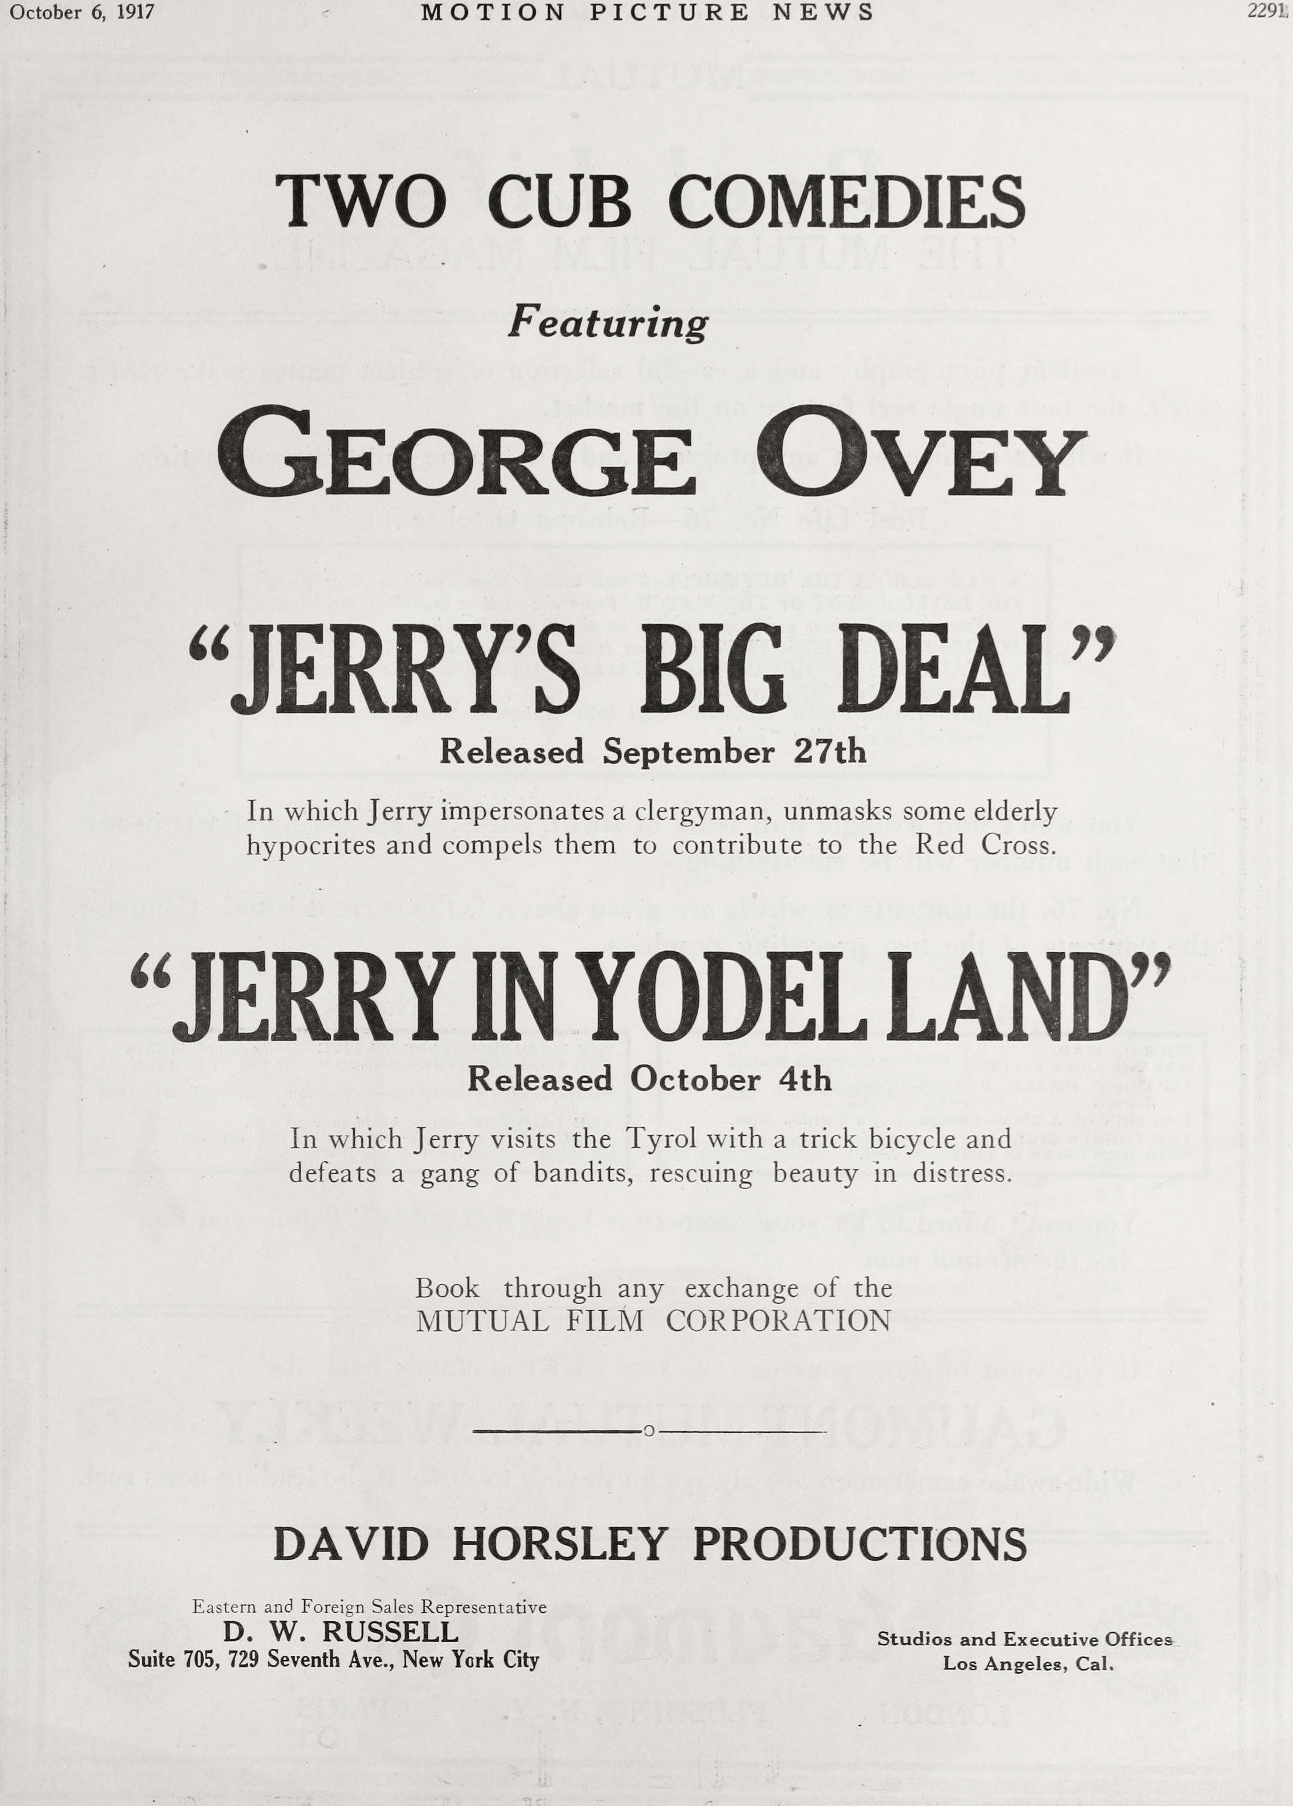 Jerry's Big Deal